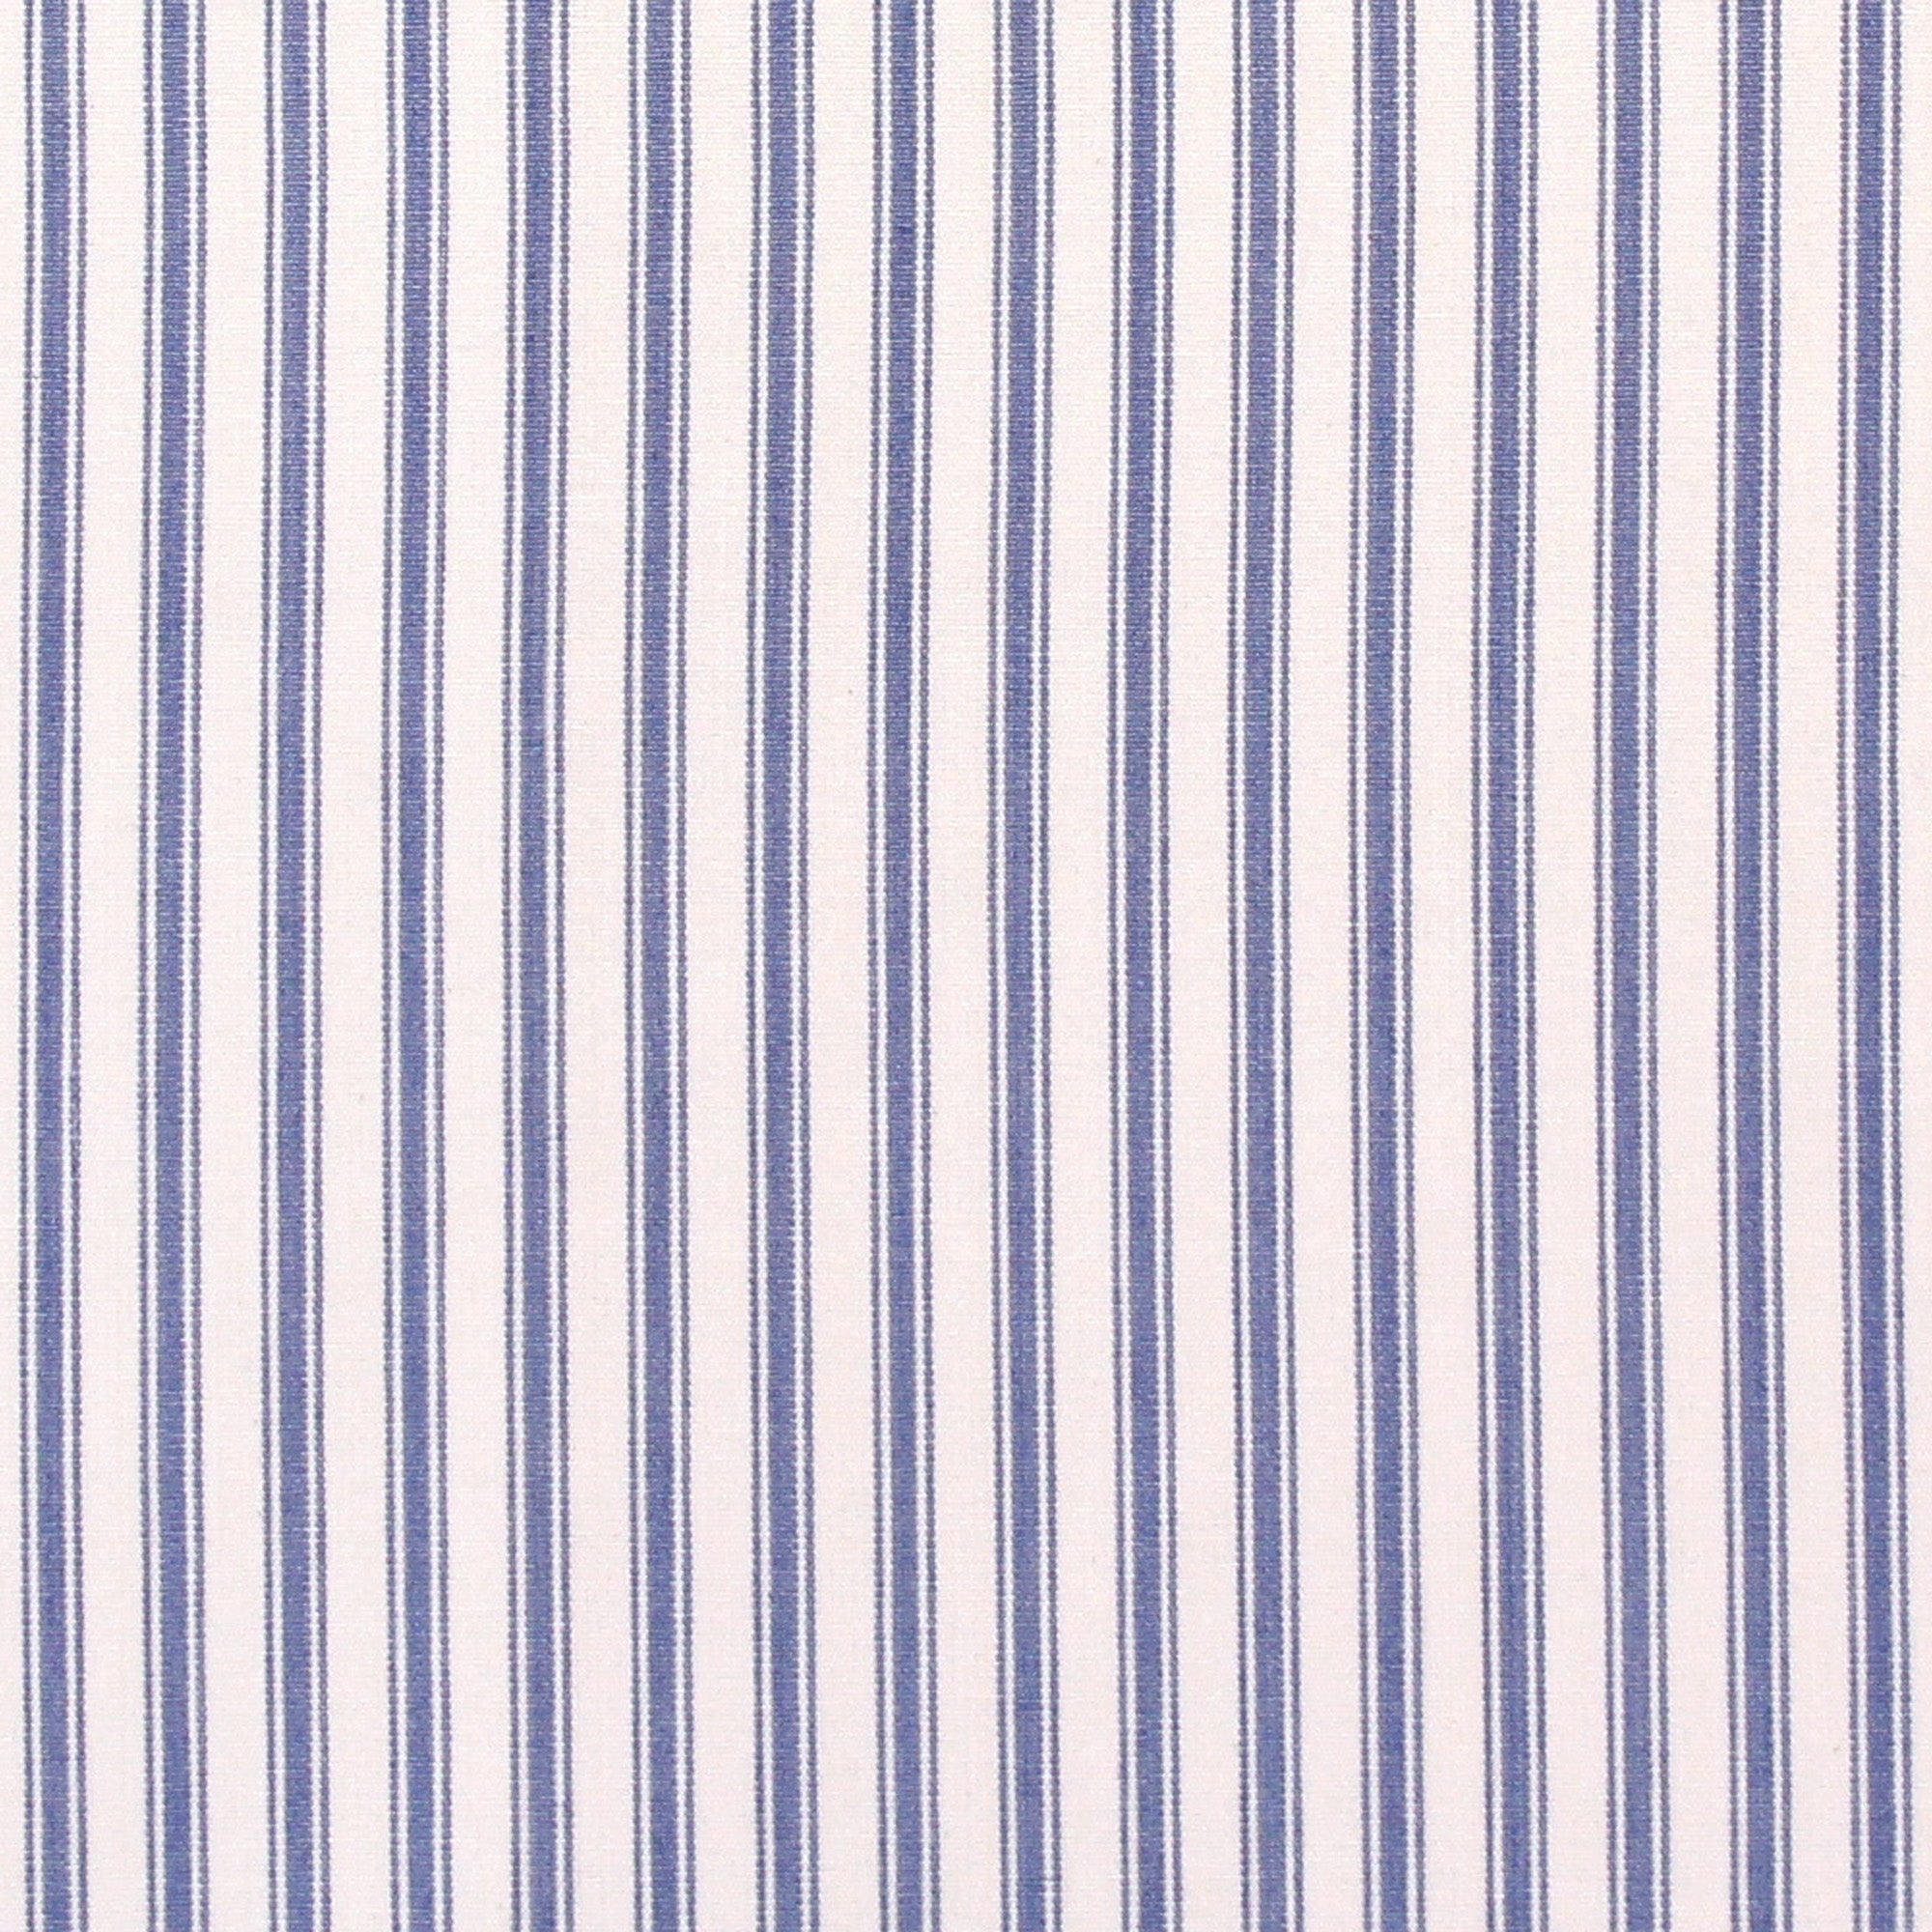 Parish Stripe Fabric in Baltic Blue Cotton Ticking Piece 8